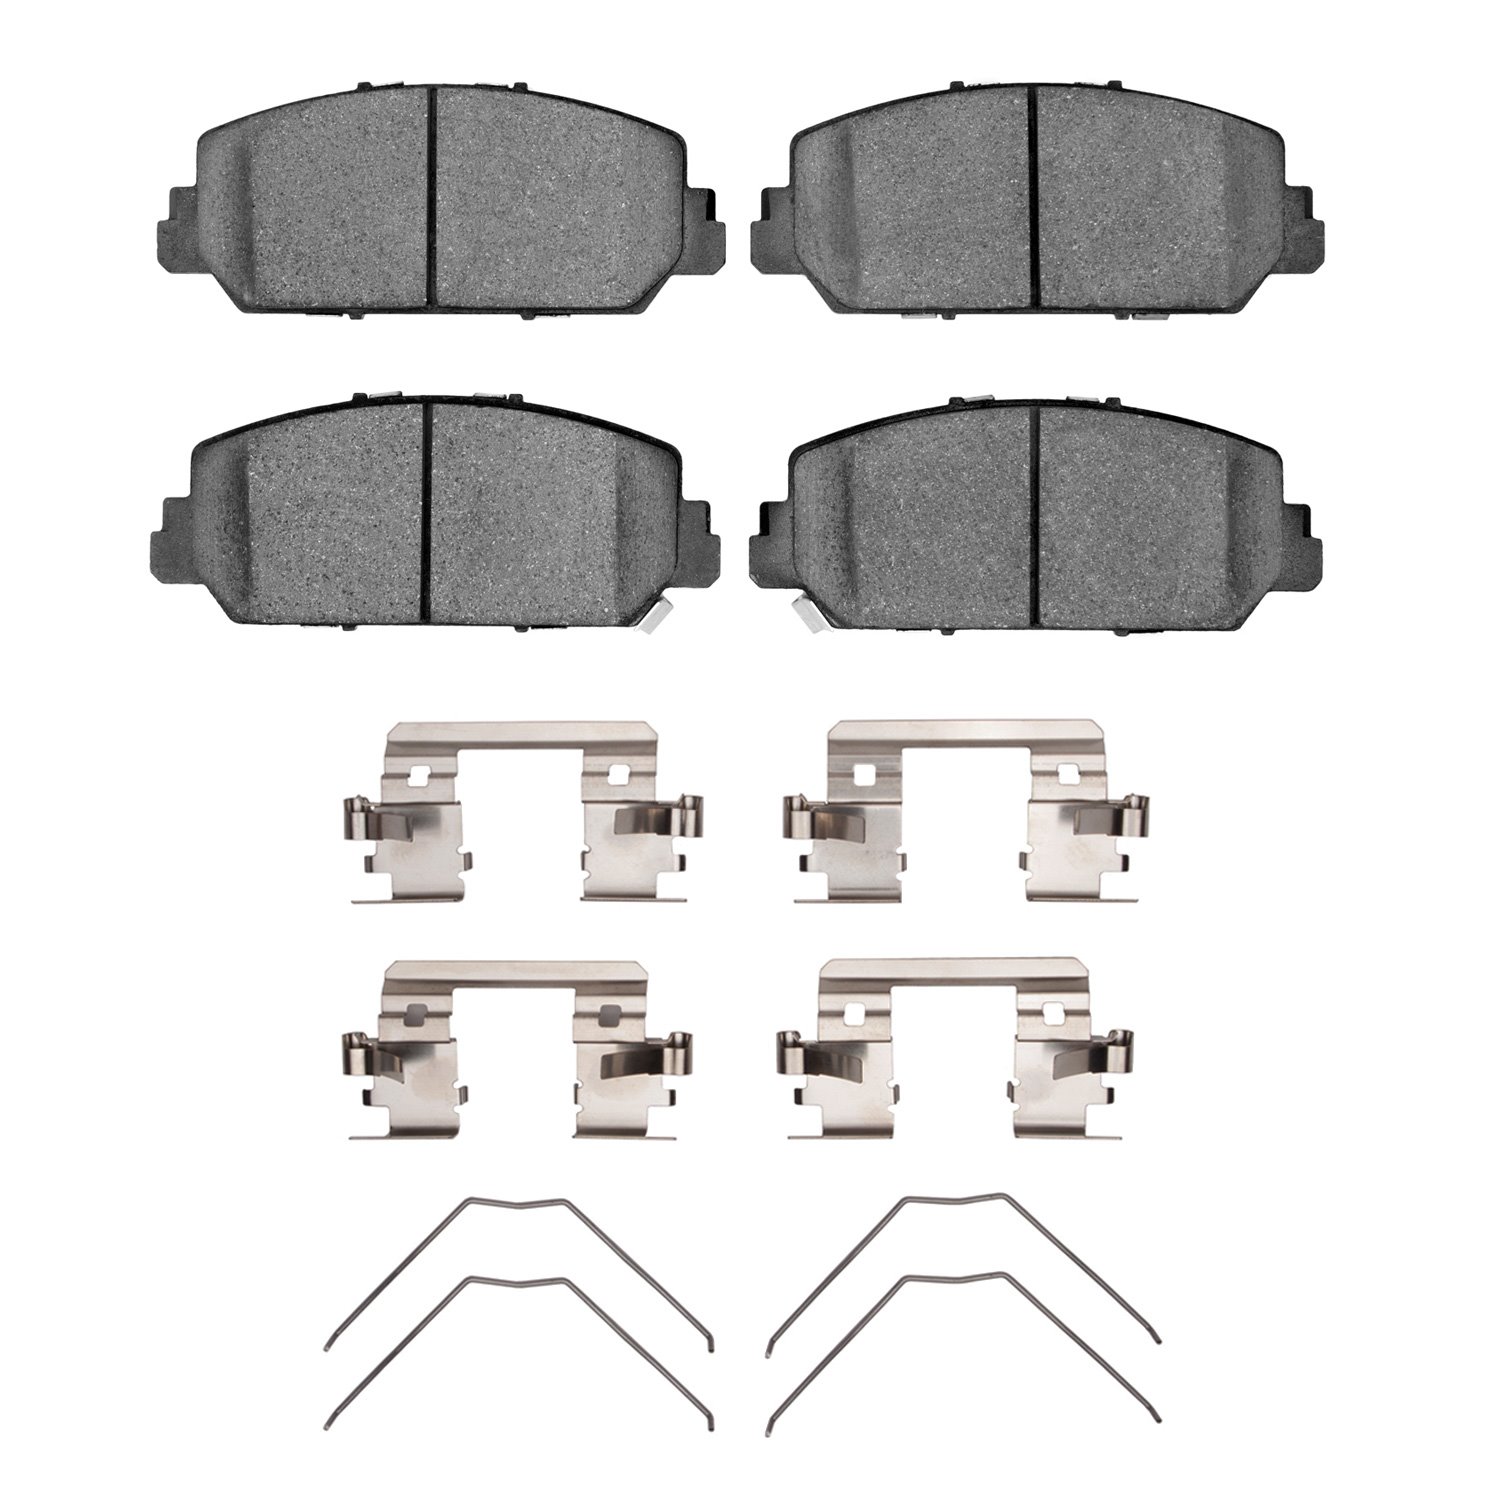 1310-1697-01 3000-Series Ceramic Brake Pads & Hardware Kit, Fits Select Acura/Honda, Position: Front